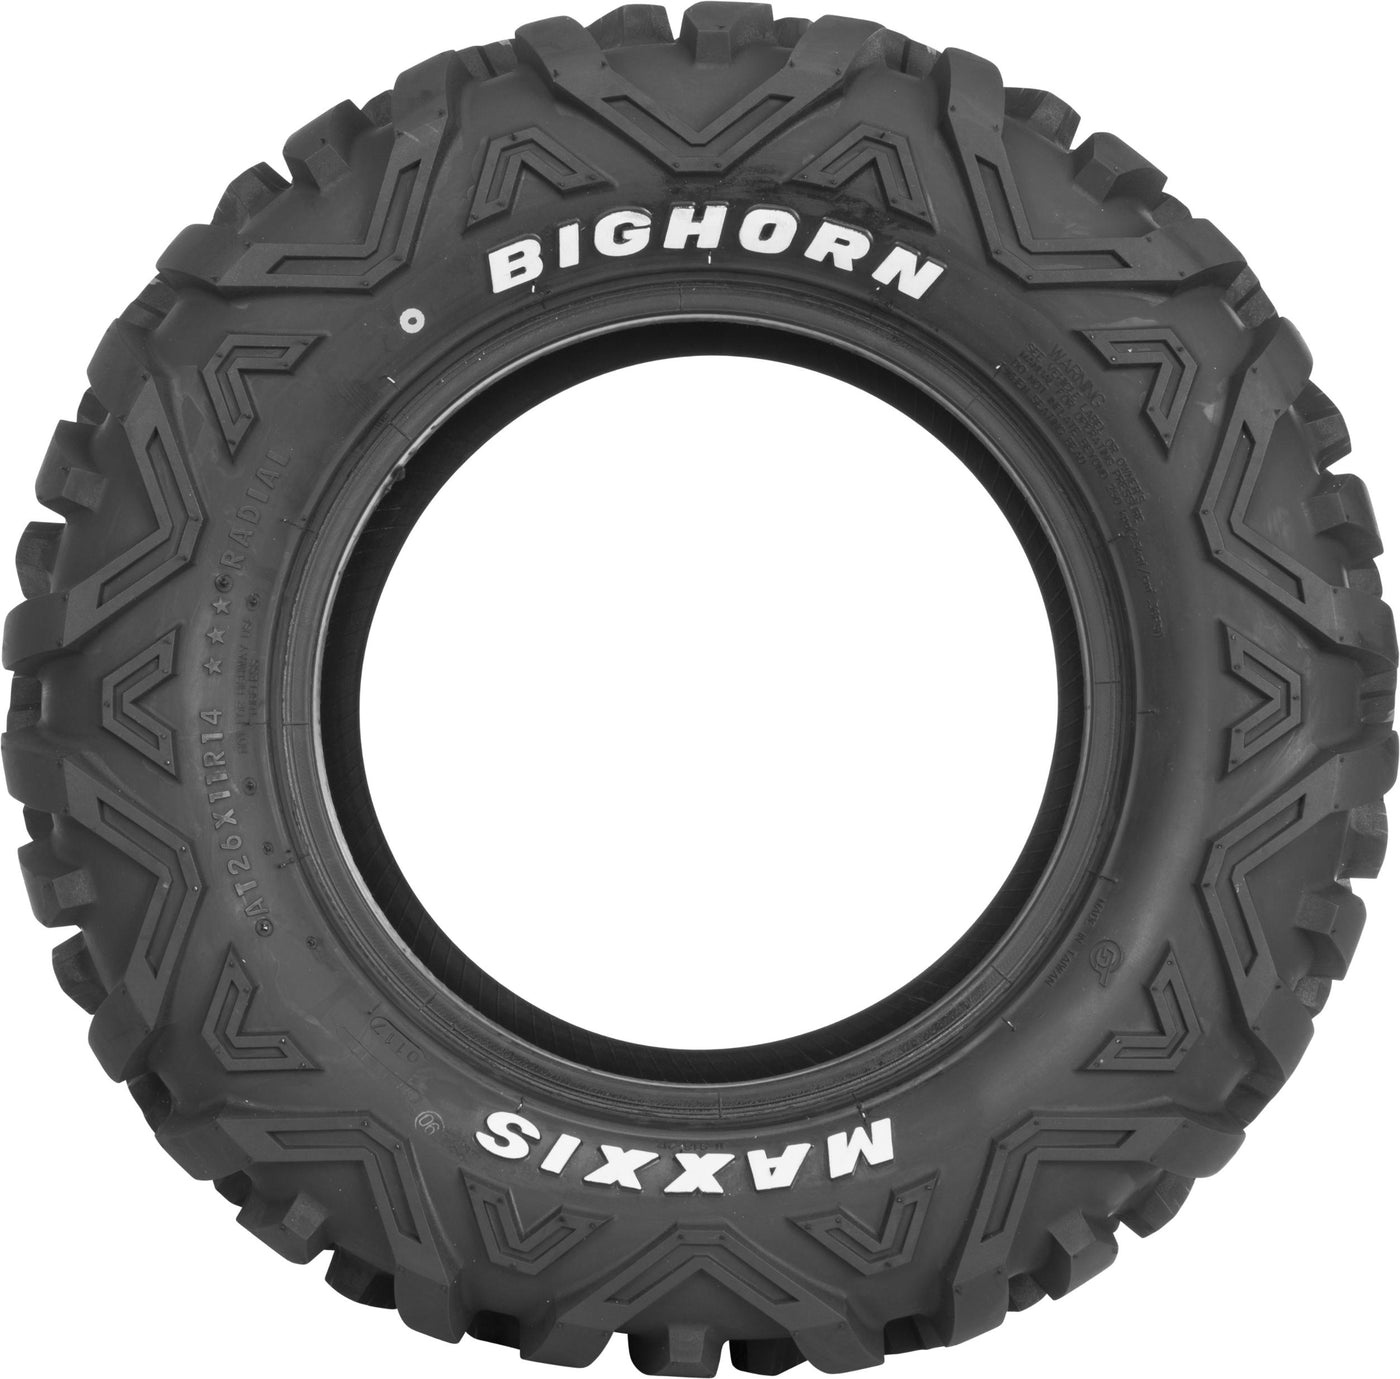 Tire Bighorn F-r 30x10r-14 Lr-1195lbs Radial